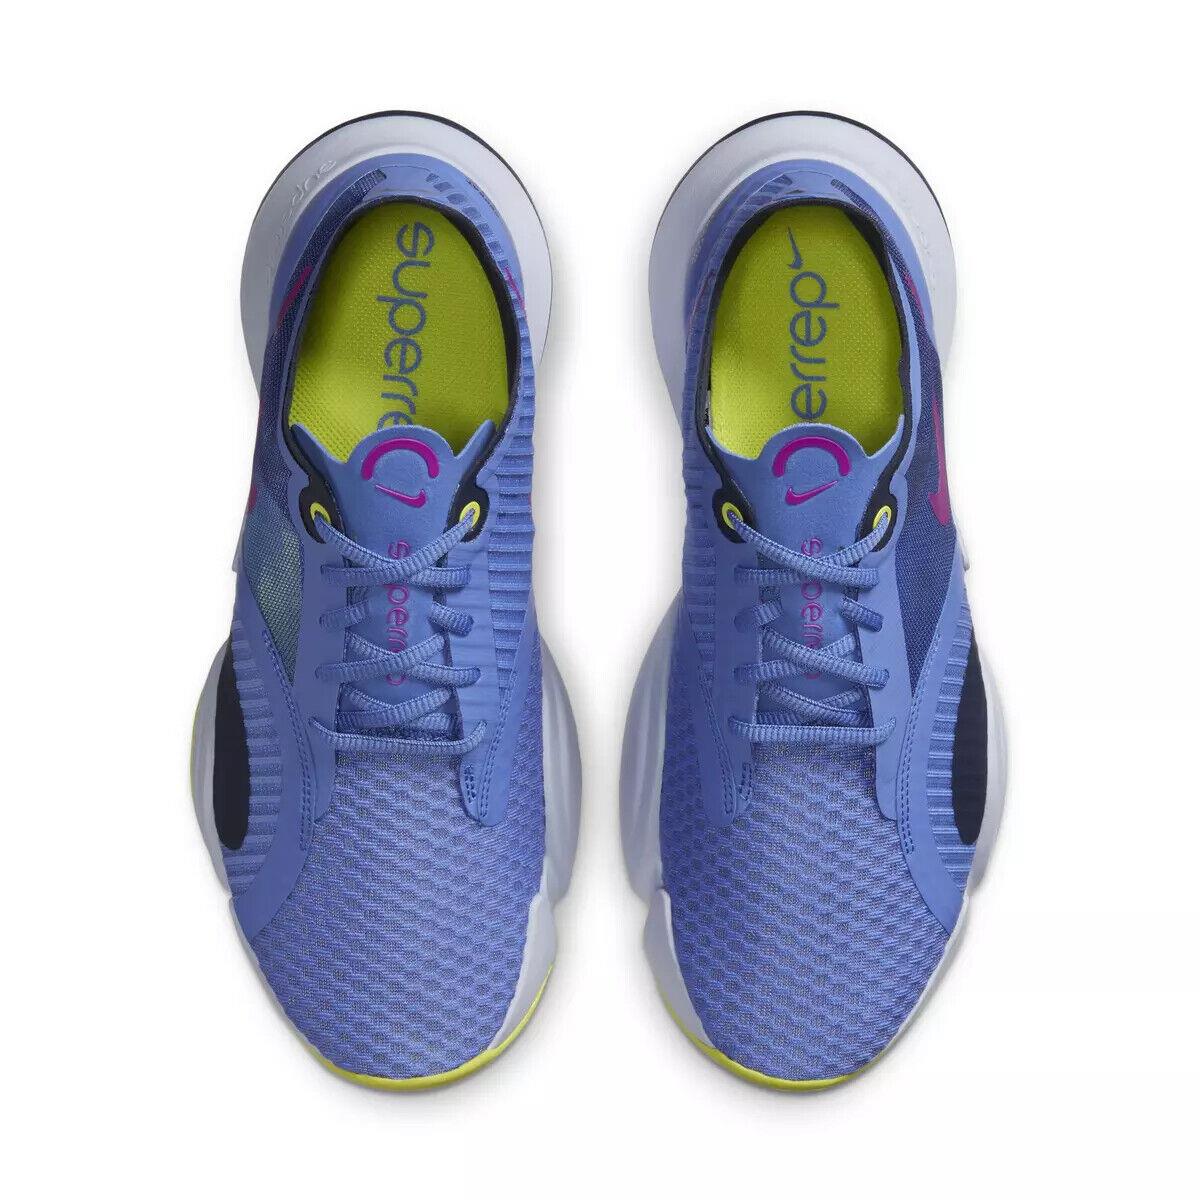 Nike shoes SUPERREP - Sapphire/Blackened Blue/Cyber/Red Plum 3